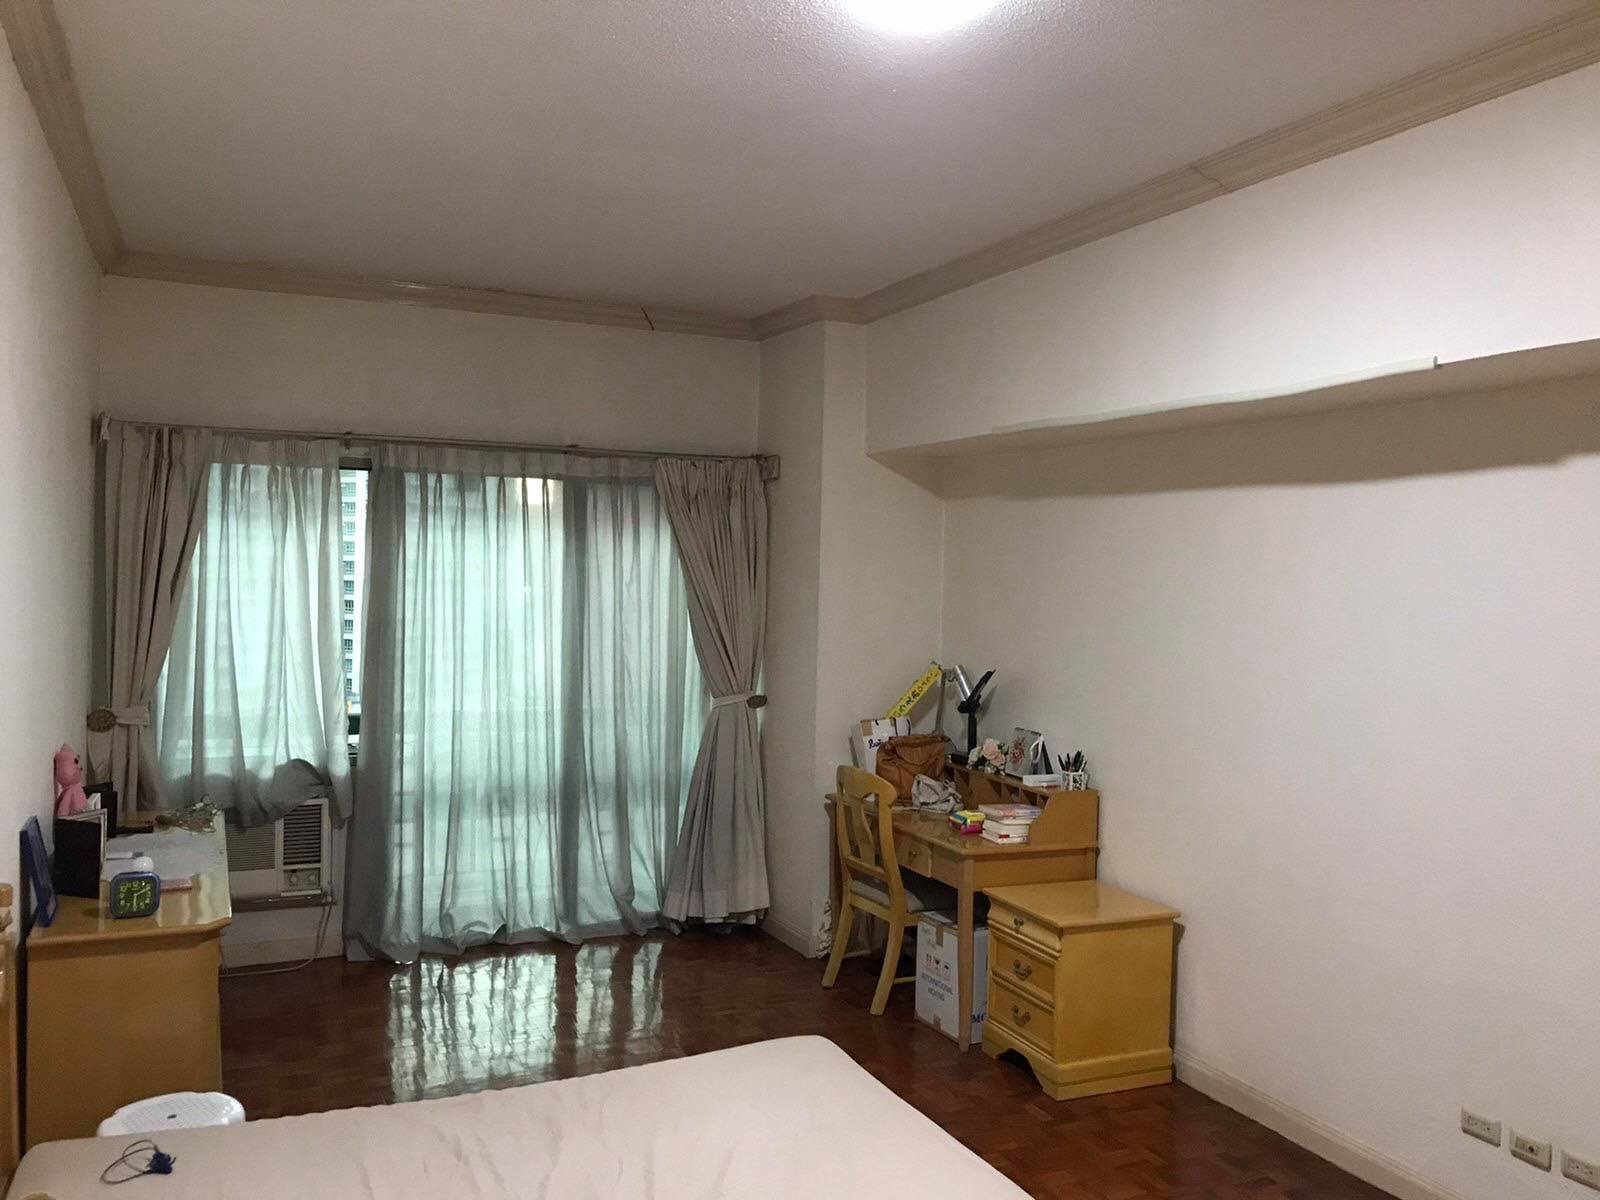 2BR Condominium in Makati City for Rent